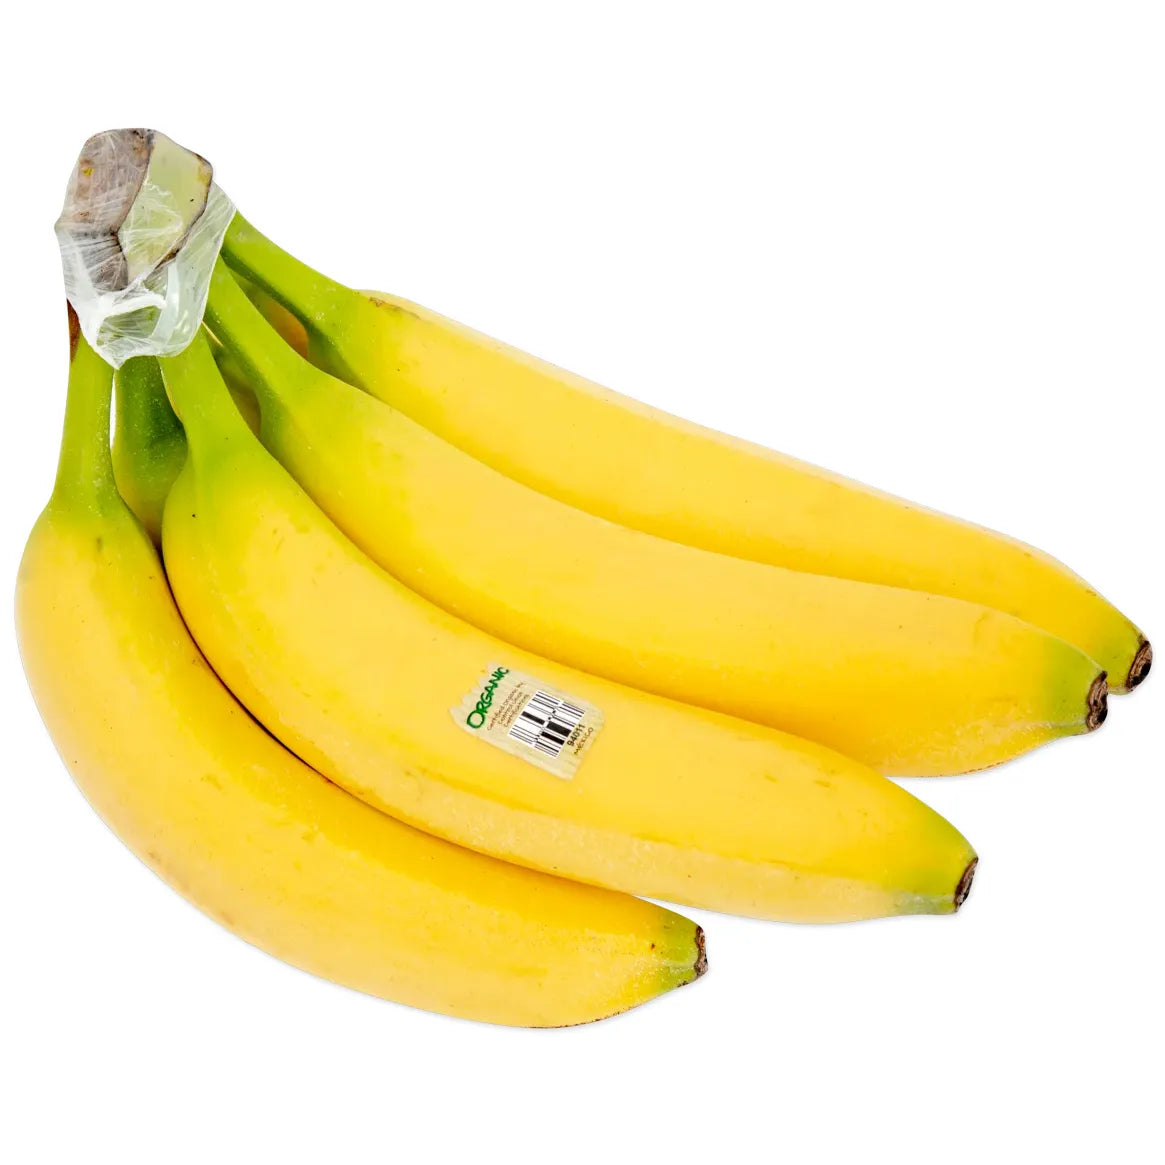 Organic Bananas each